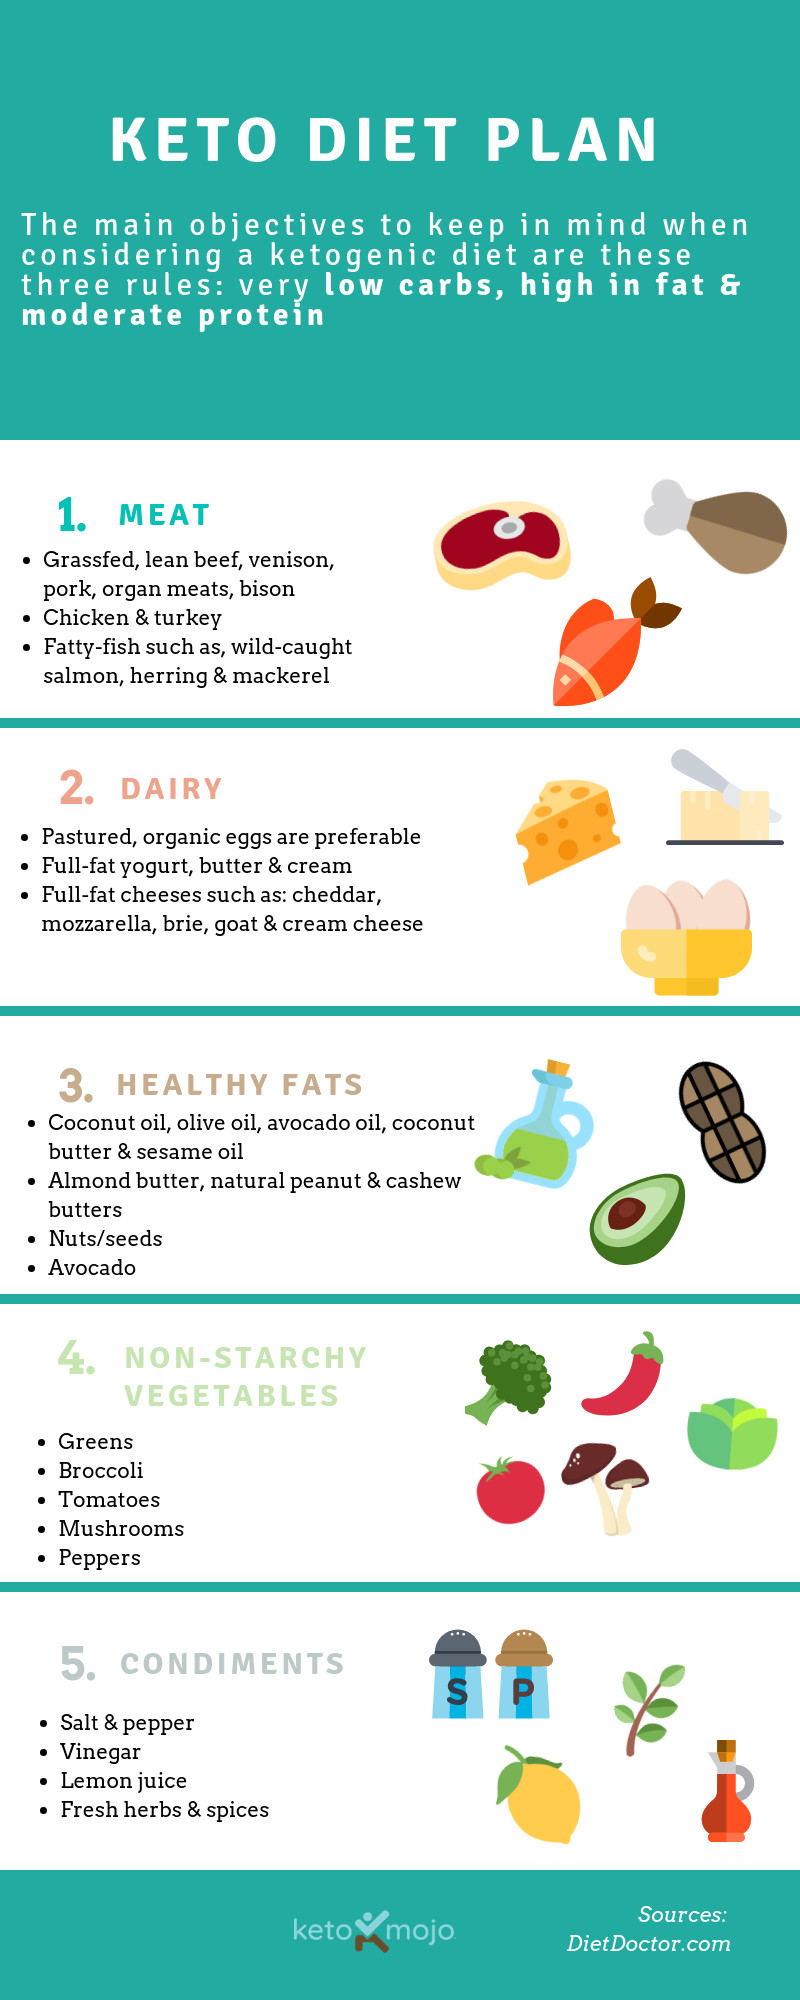 How To Start The Keto Diet For Beginners
 Keto Diet Plan For Beginners